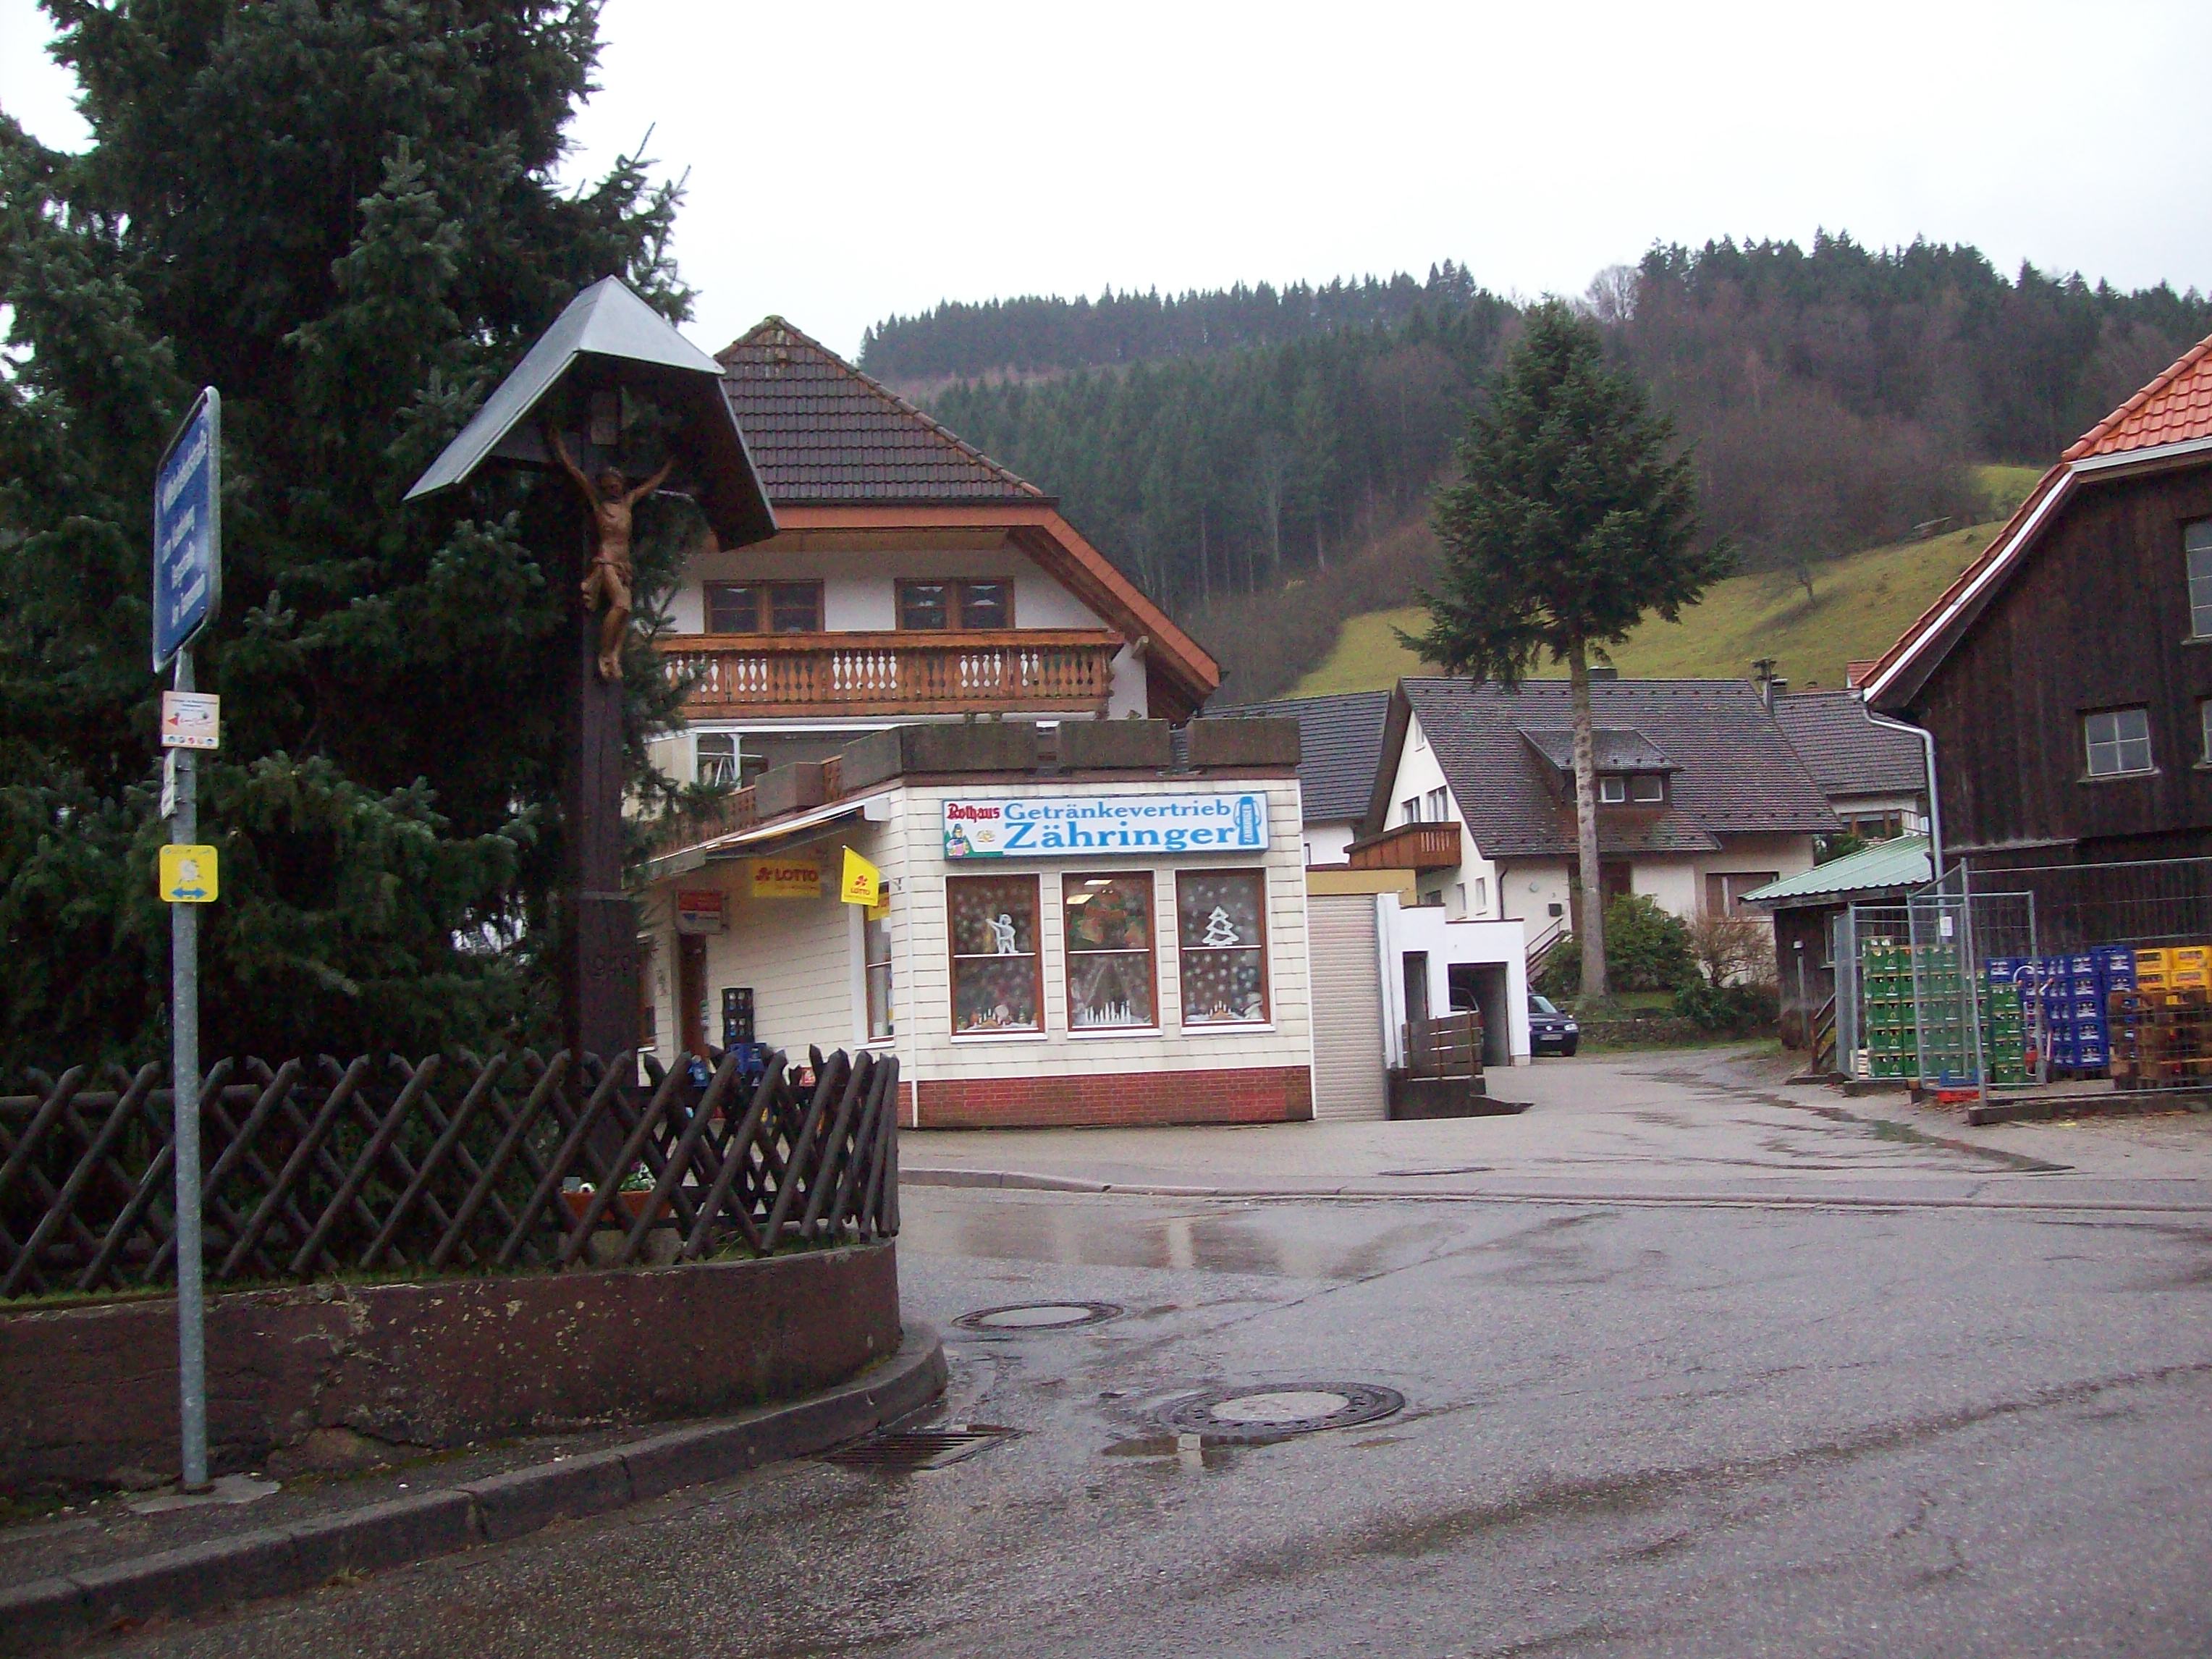 Bild 1 Zähringer in Oberried